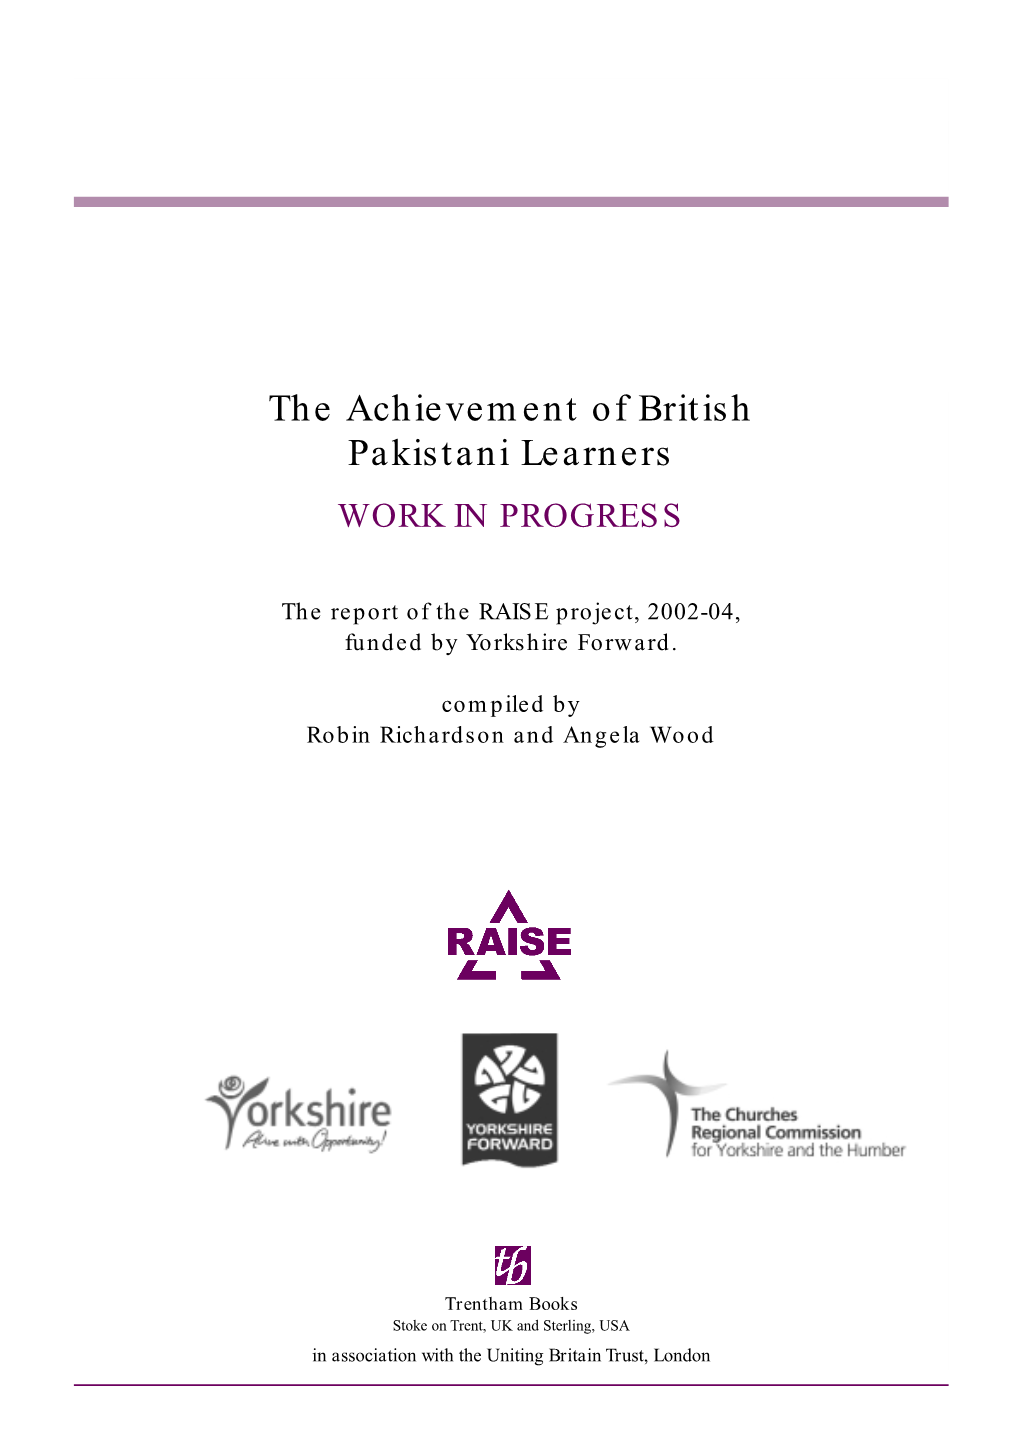 The Achievement of British Pakistani Learners WORK in PROGRESS